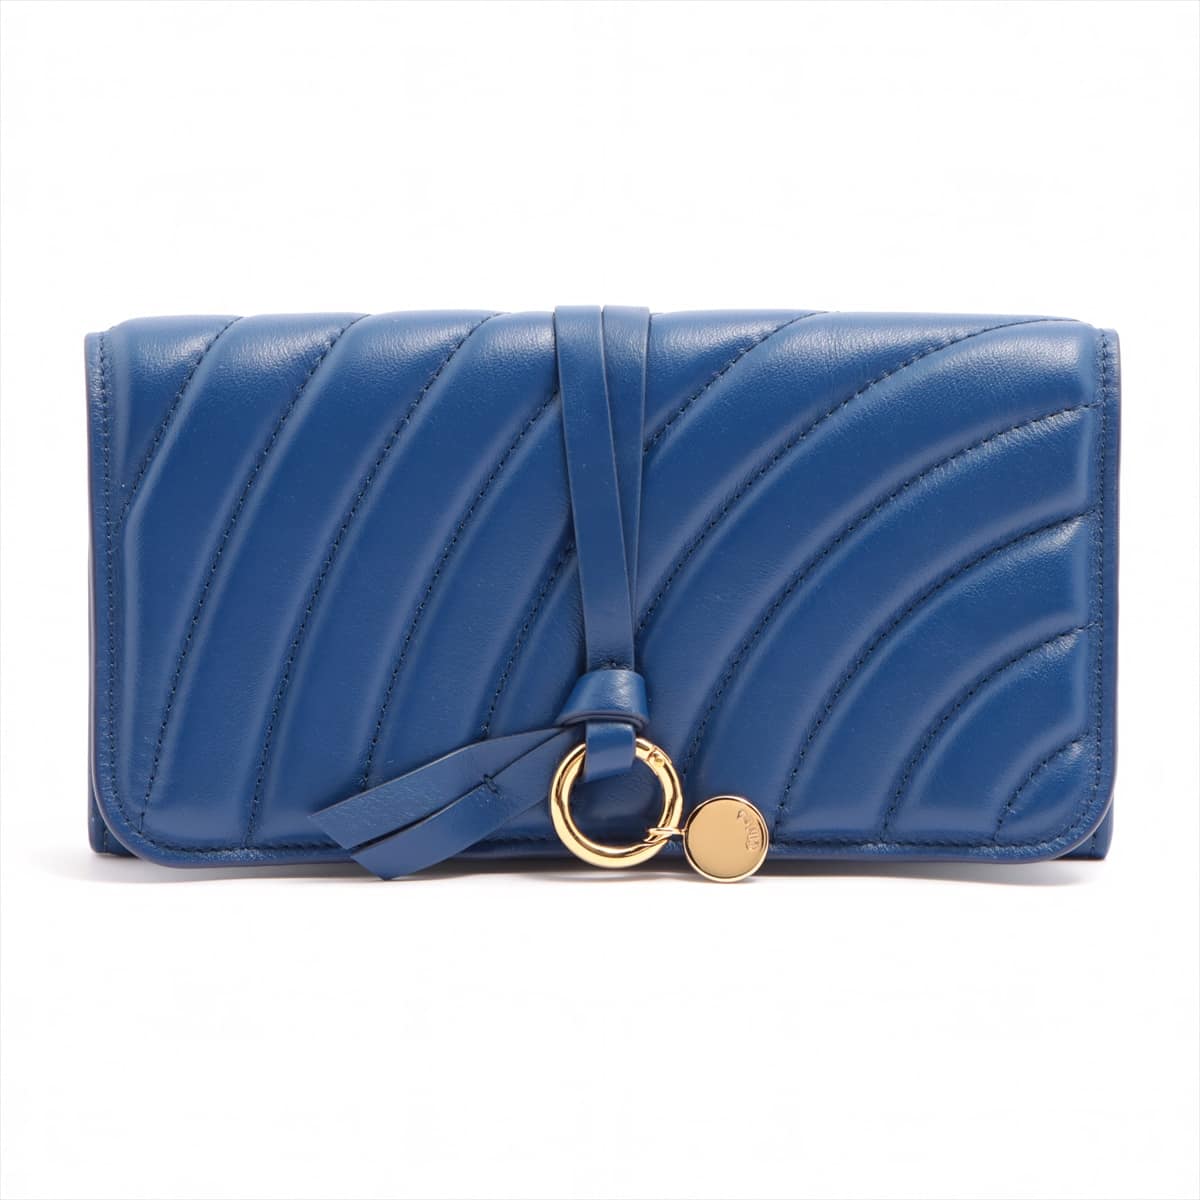 Chloe Leather Wallet Navy blue